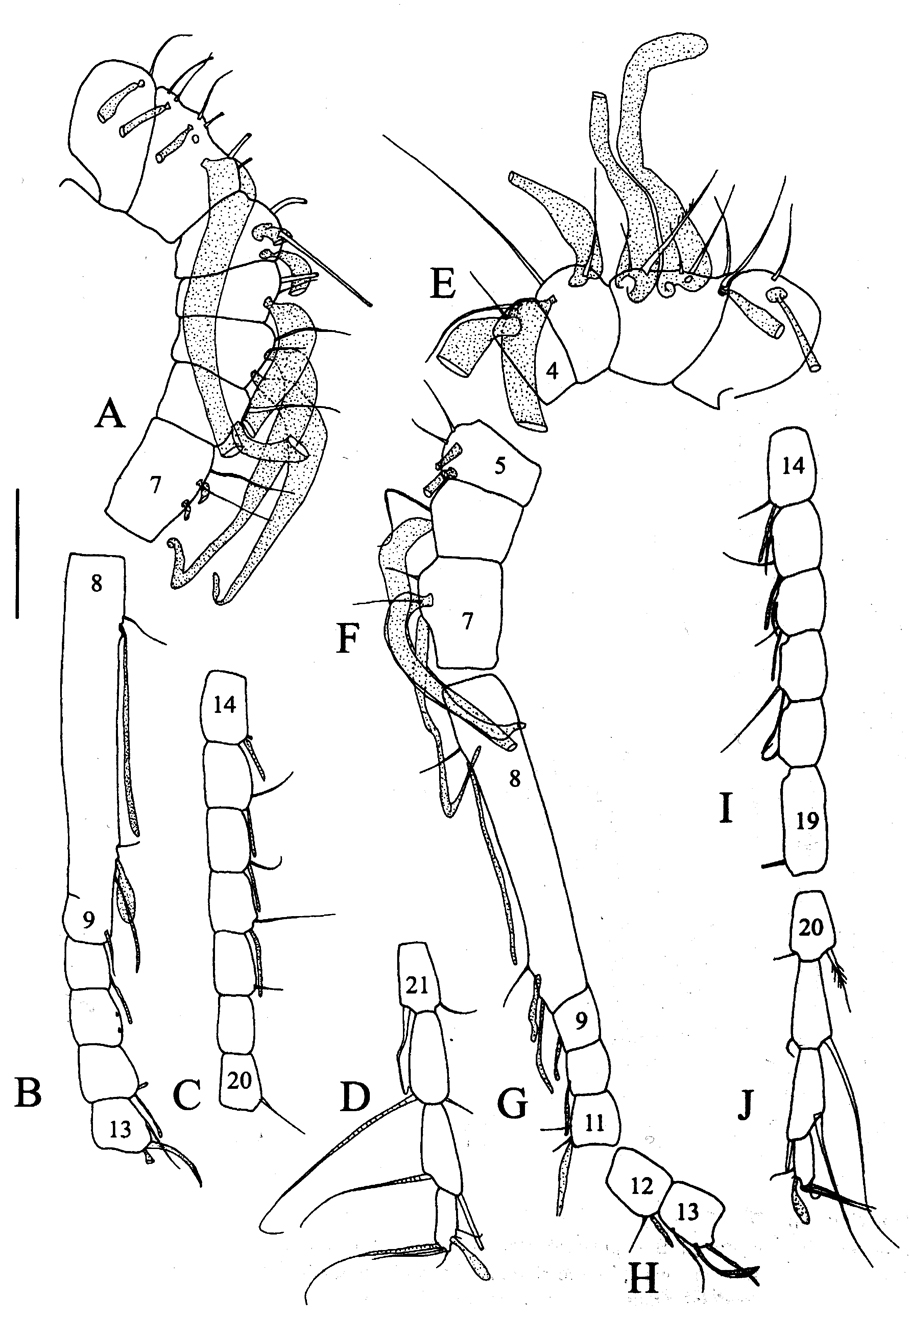 Species Brodskius sp. - Plate 2 of morphological figures